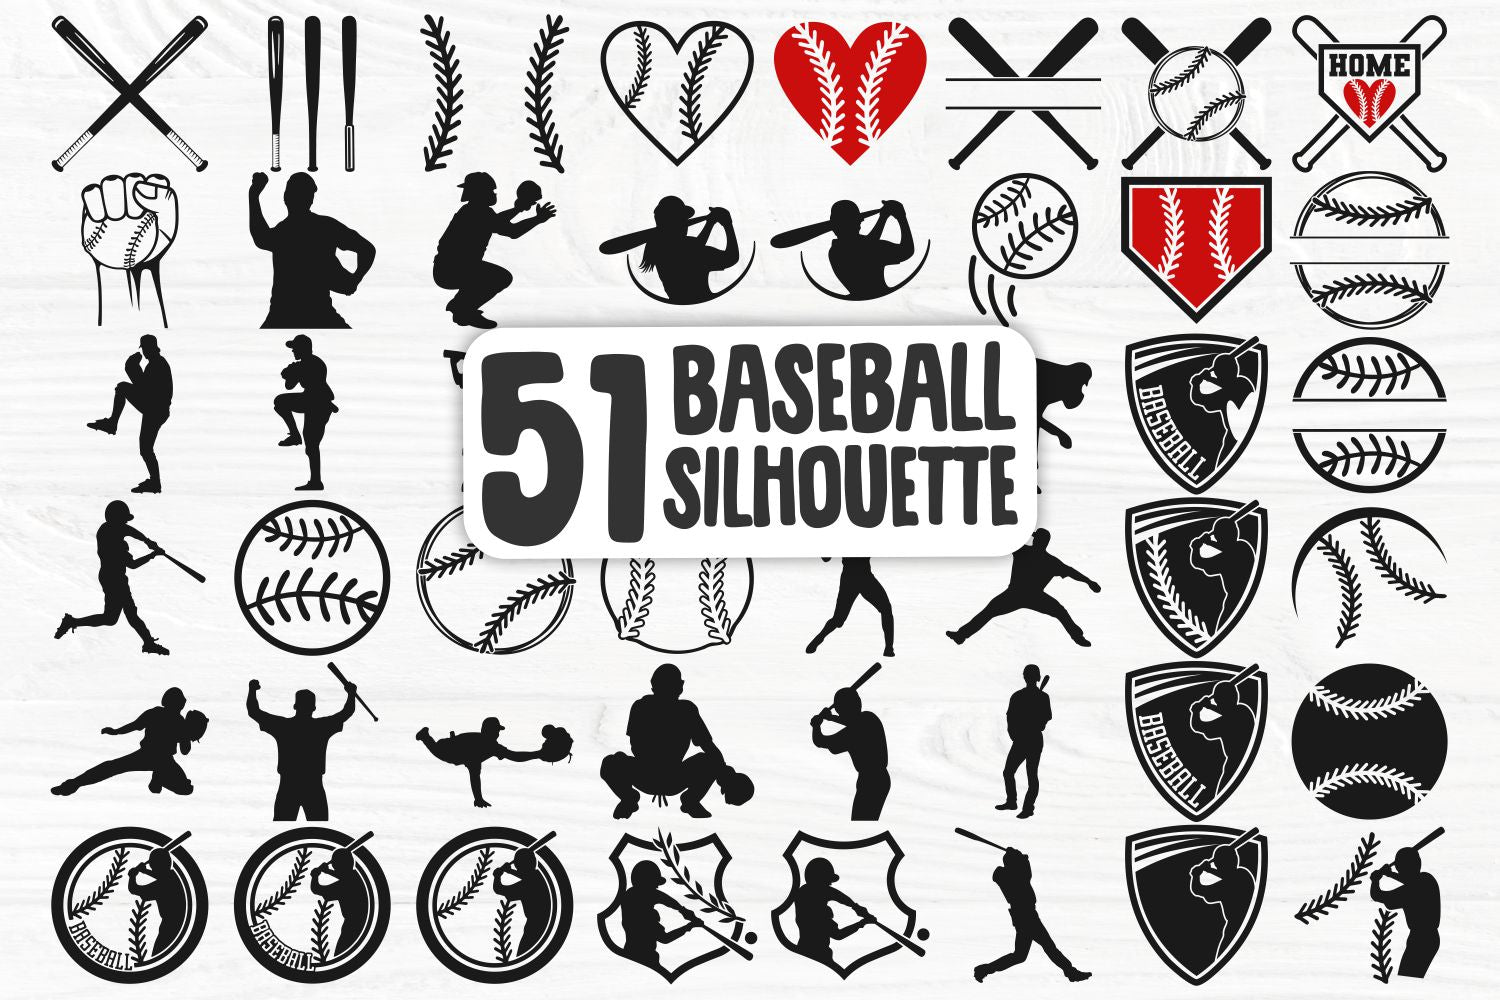 baseball player silhouette clip art